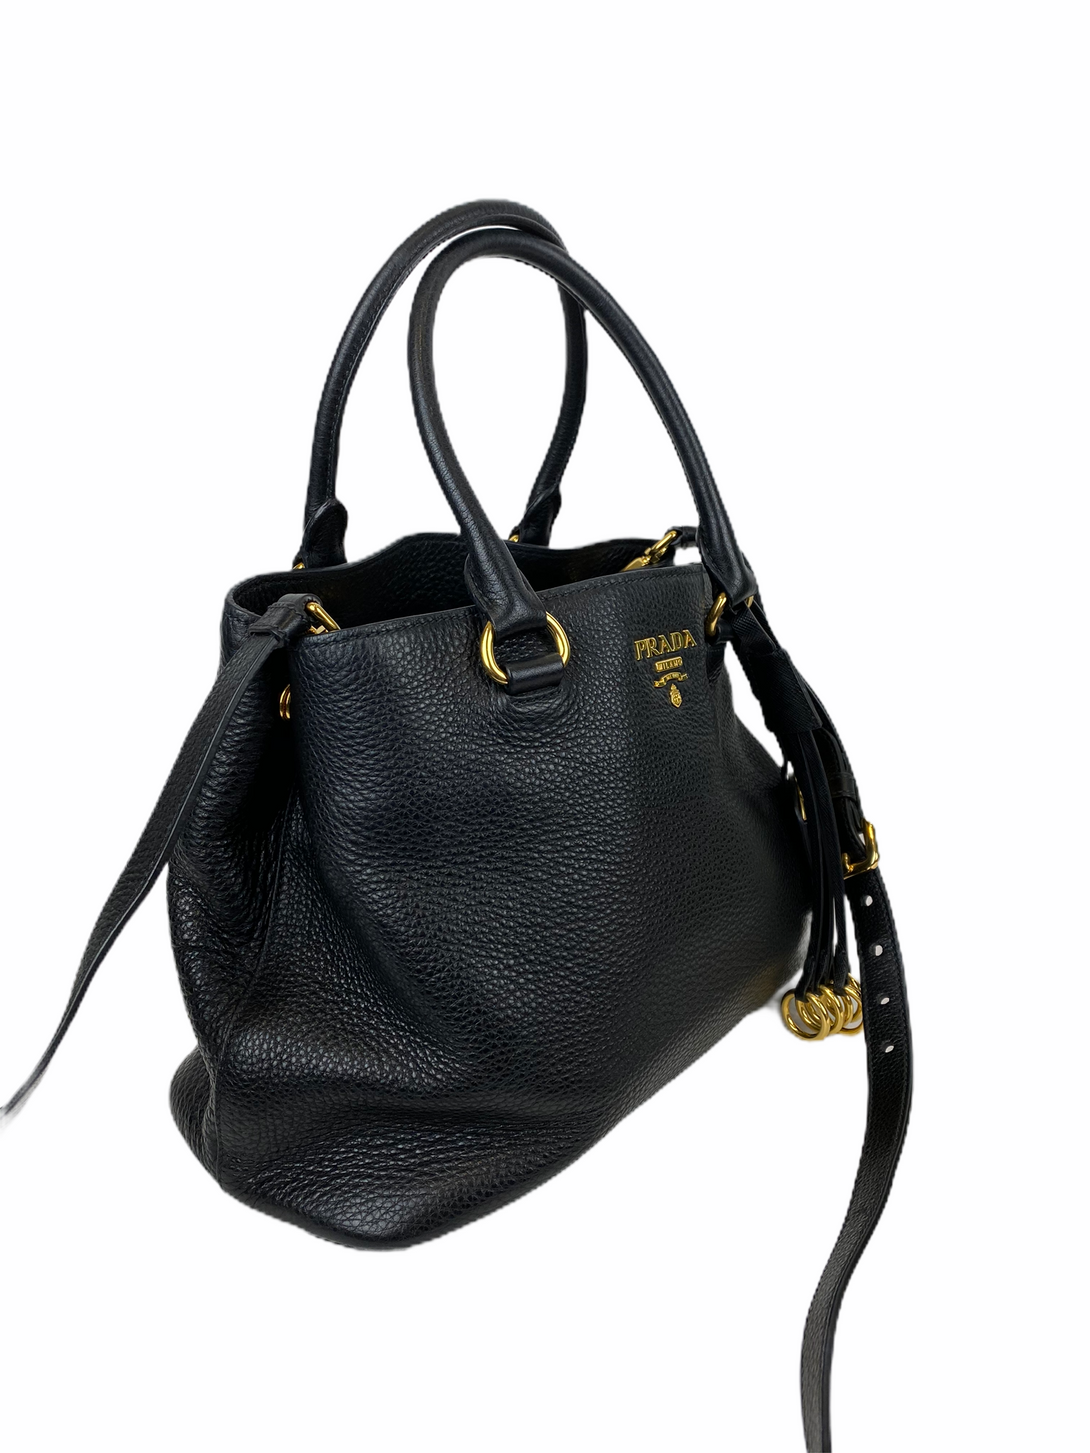 Prada Pebbled Black Leather Shoulder Bag - As Seen on Instagram 30/08/2020 - Siopaella Designer Exchange